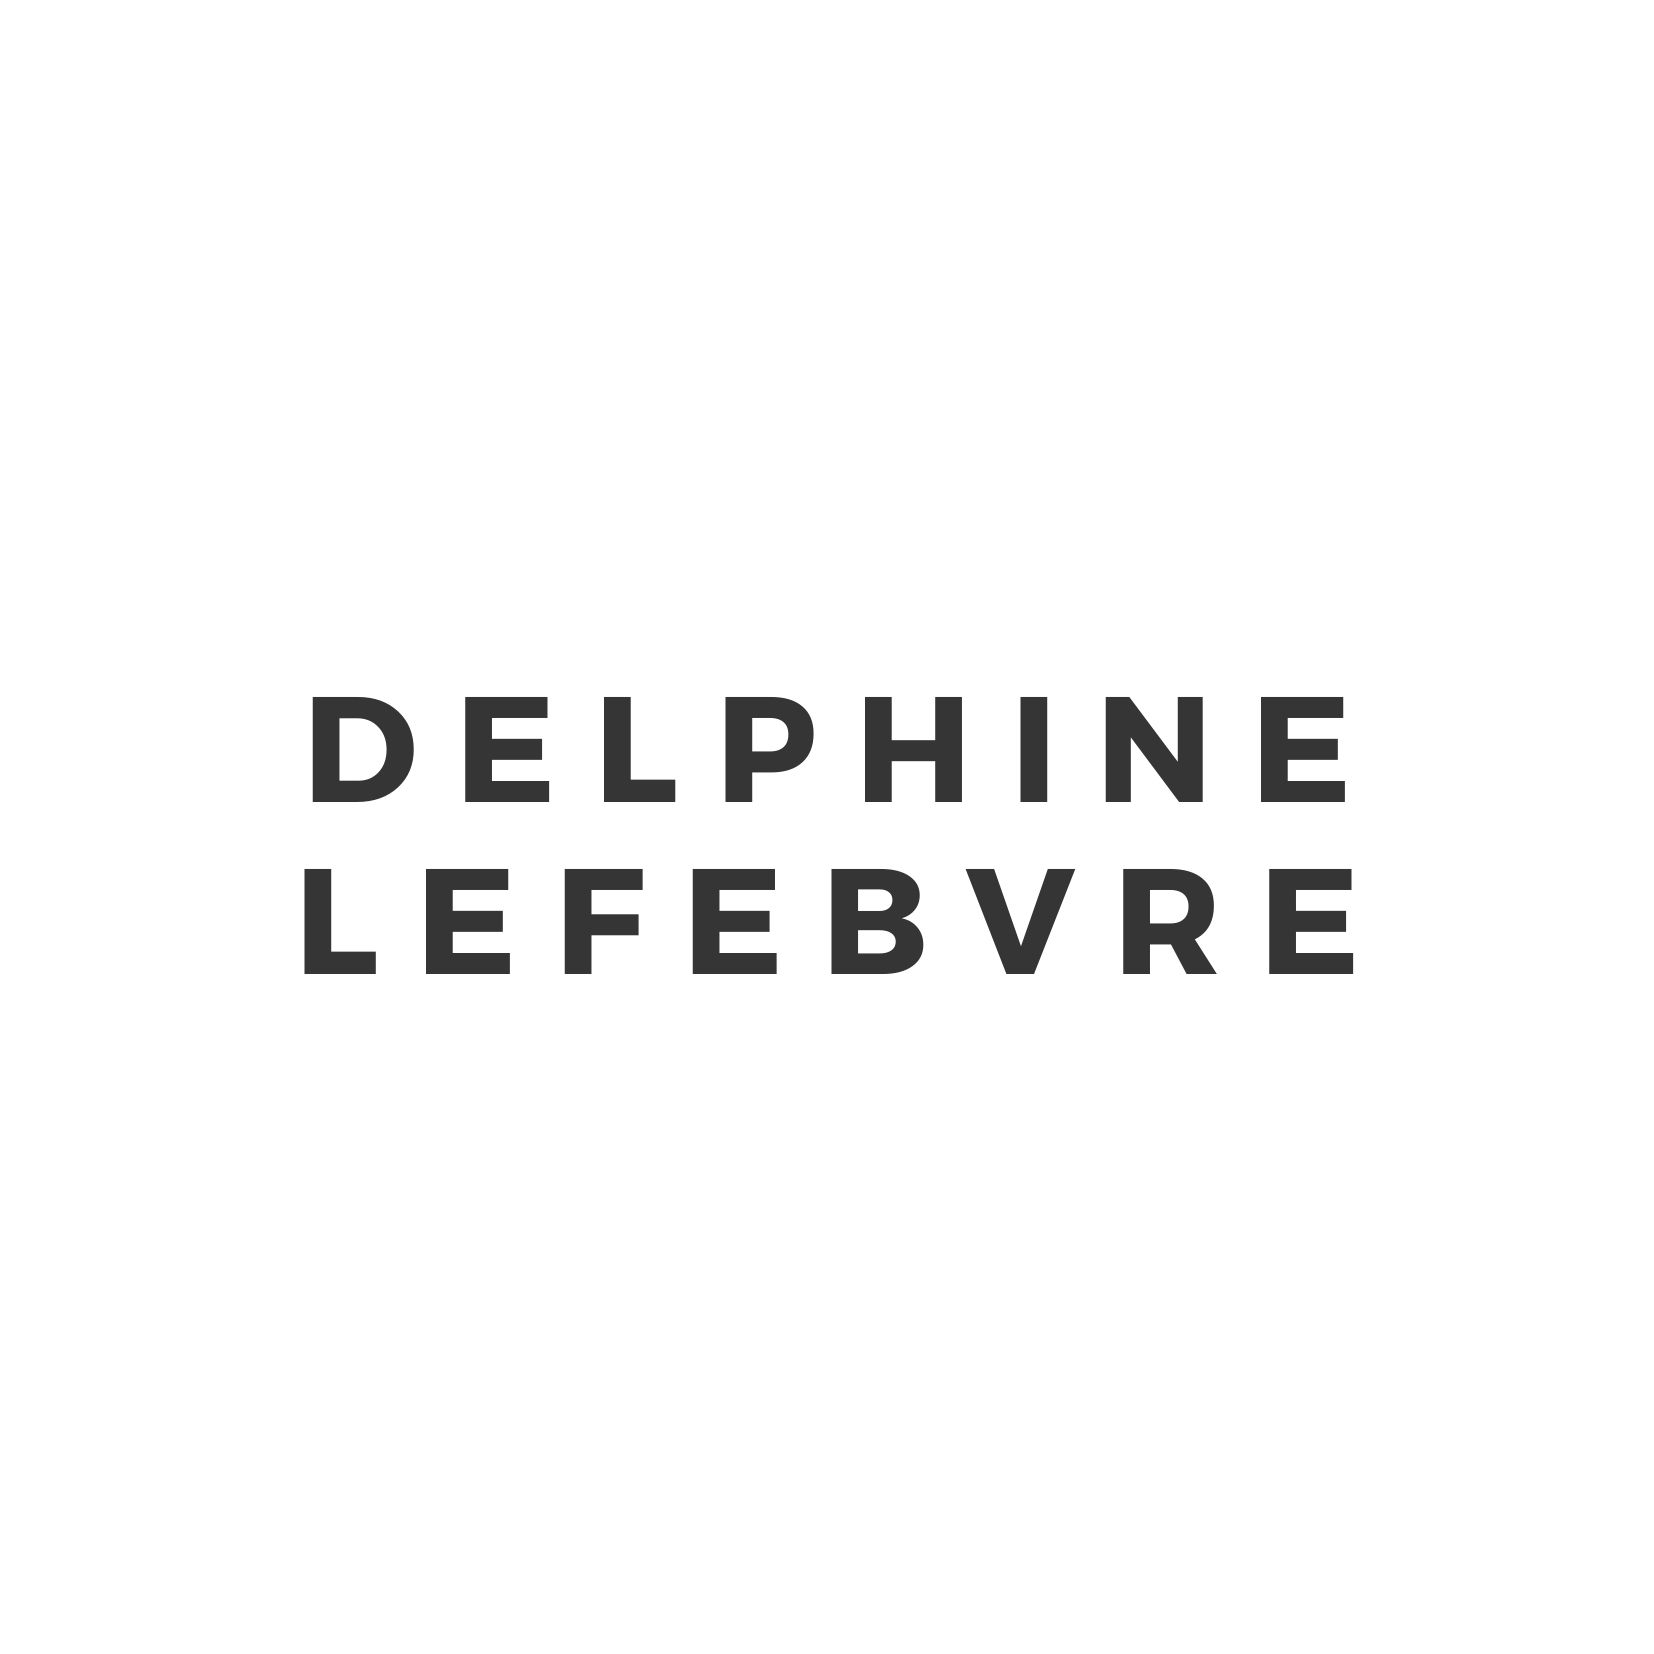 Delphine Lefebvre photographe